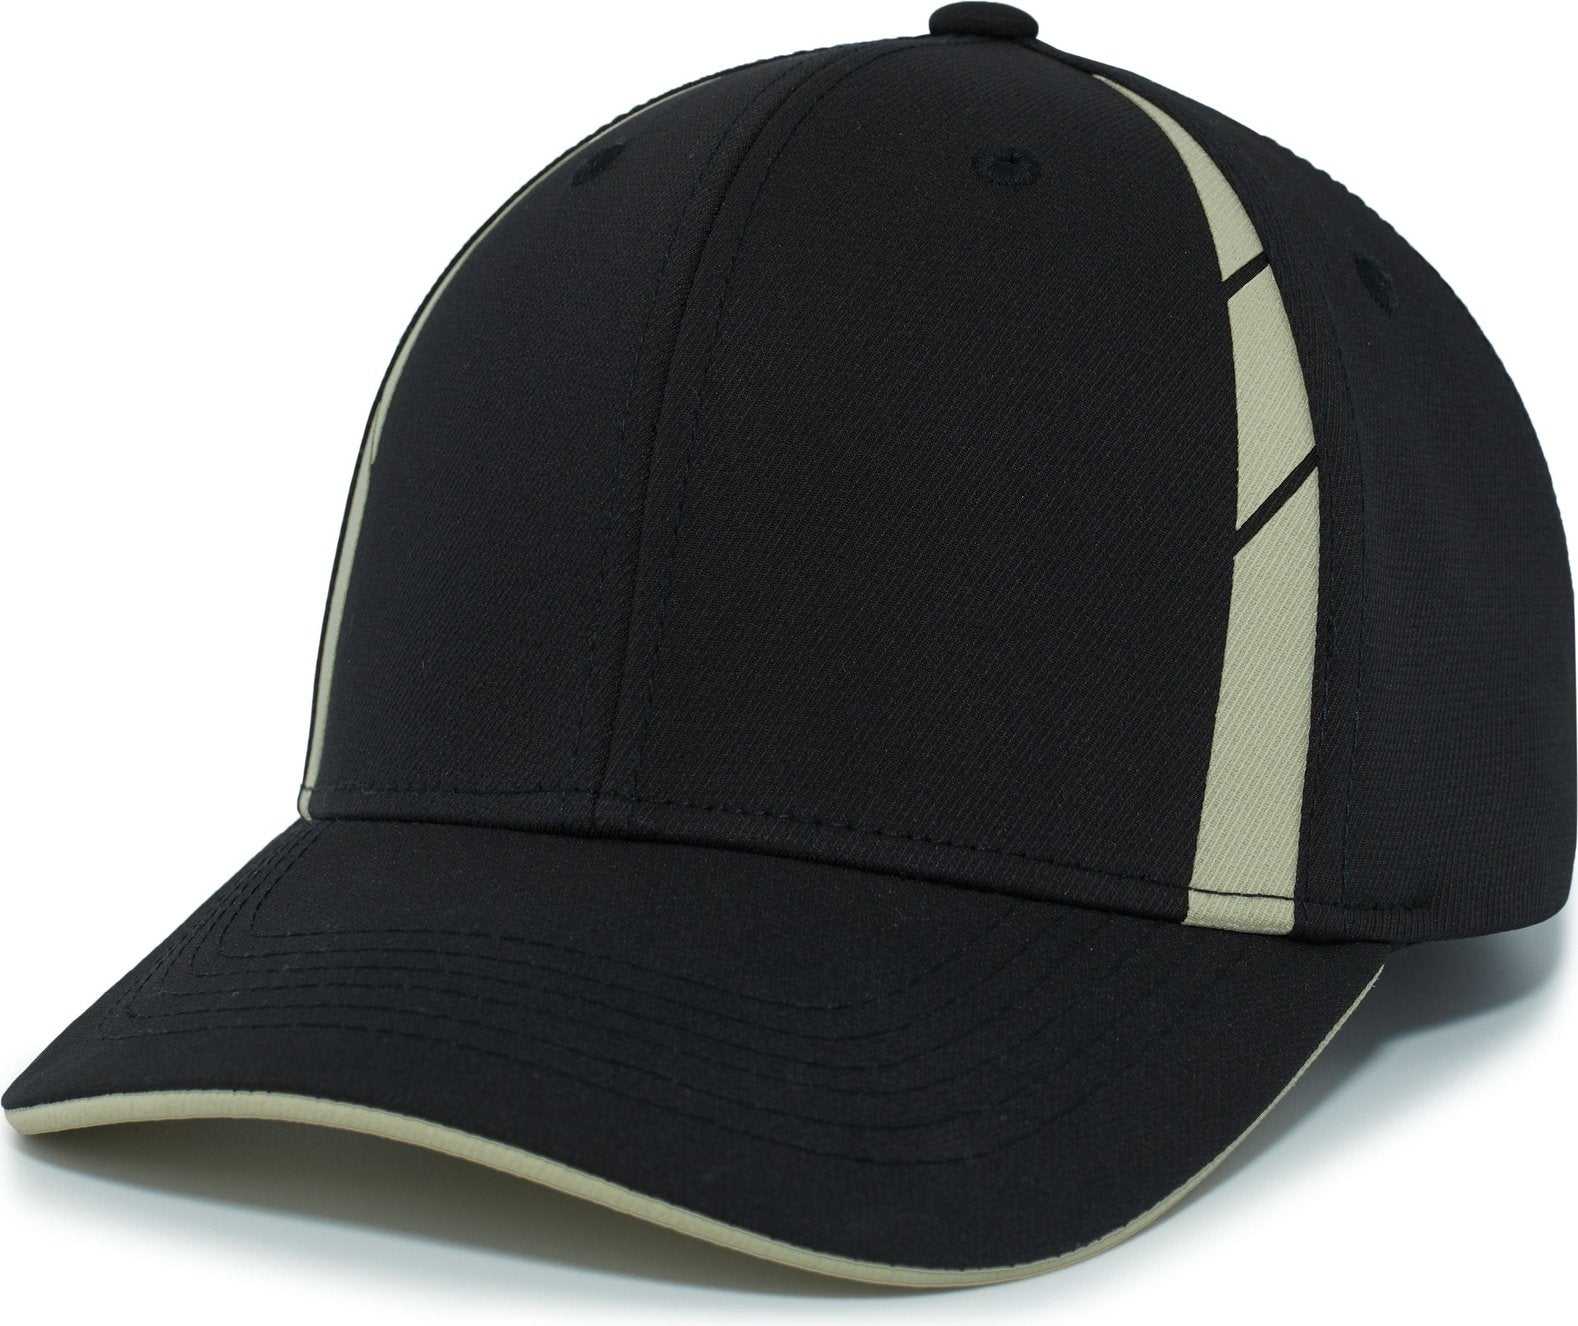 Pacific Headwear P303 Coolcore Sideline Snapback Cap - Black Vegas Gold - HIT a Double